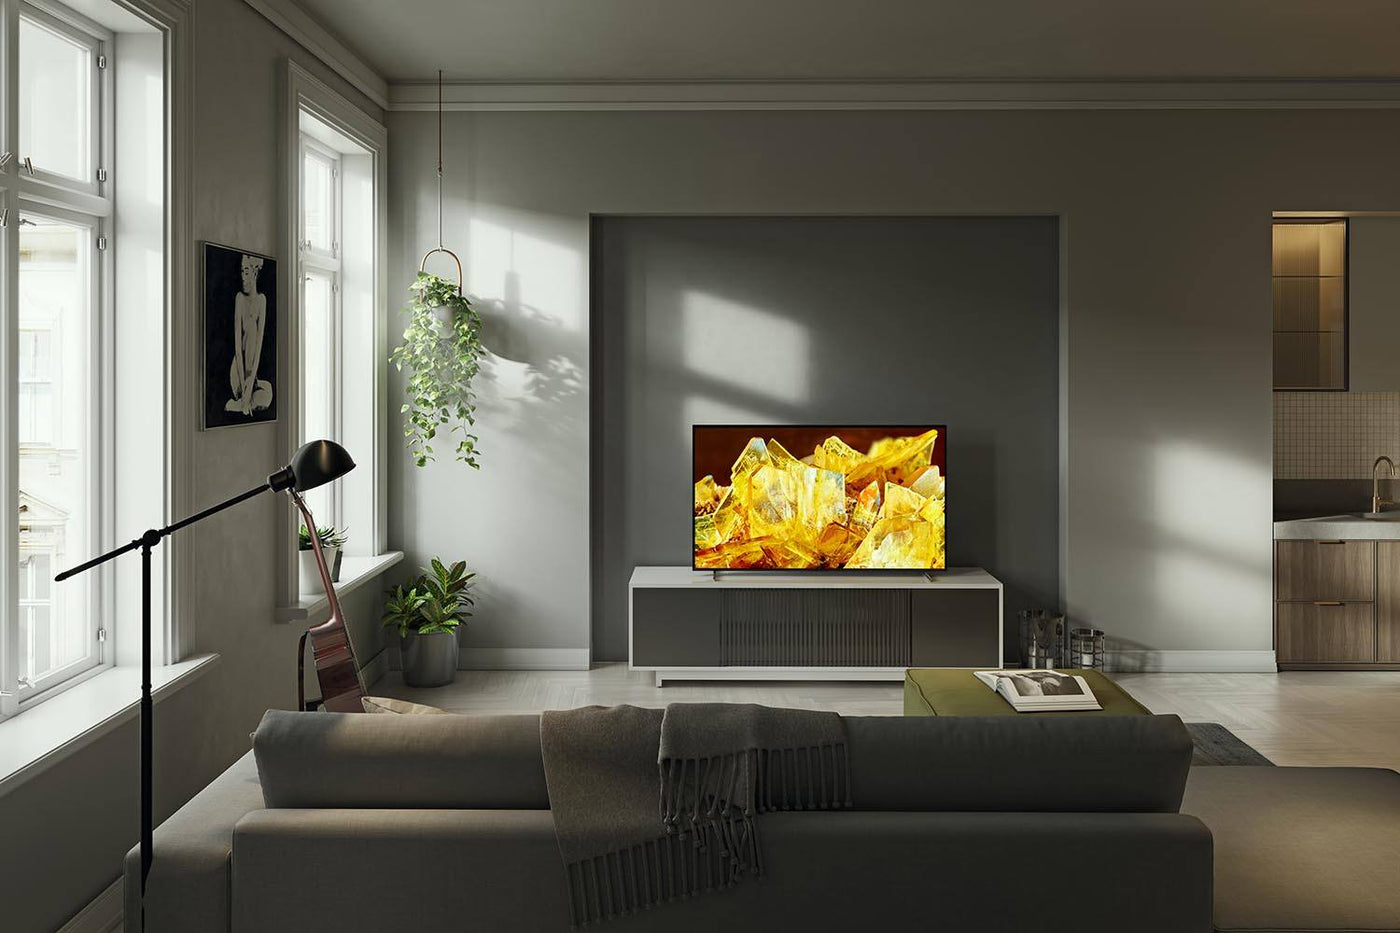 SONY BRAVIA XR 98" X90L FULL ARRAY LED 4K HDR Google TV - XR98X90L